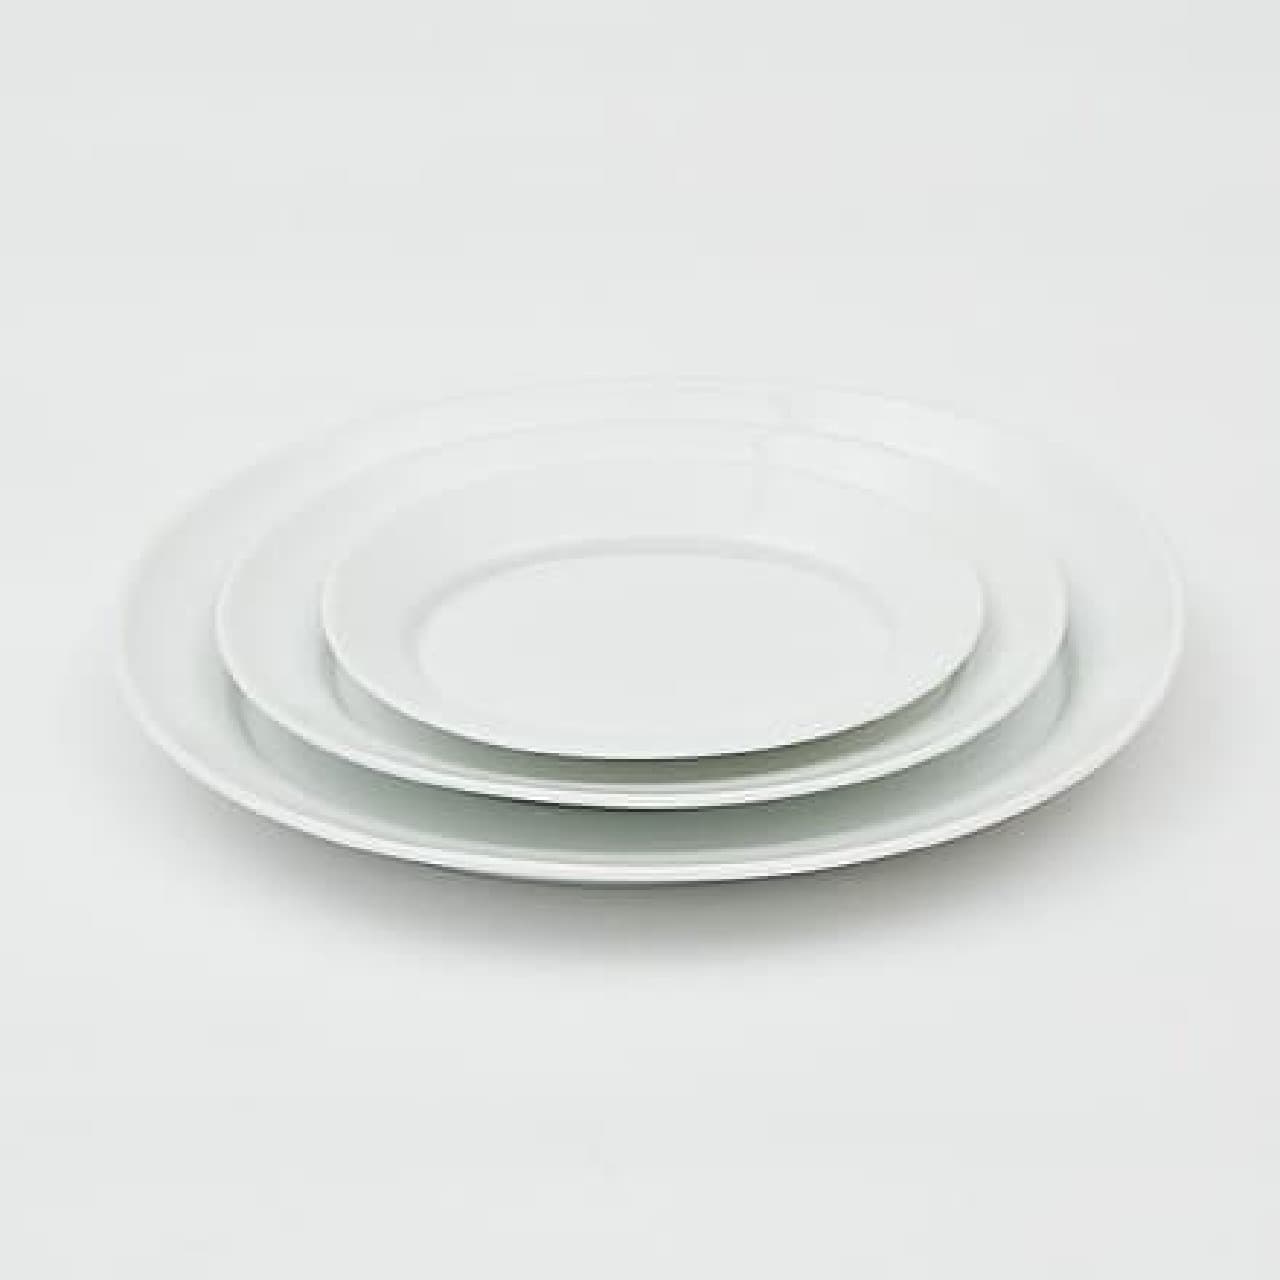 share with Kurihara harumi "Oval rim plate"